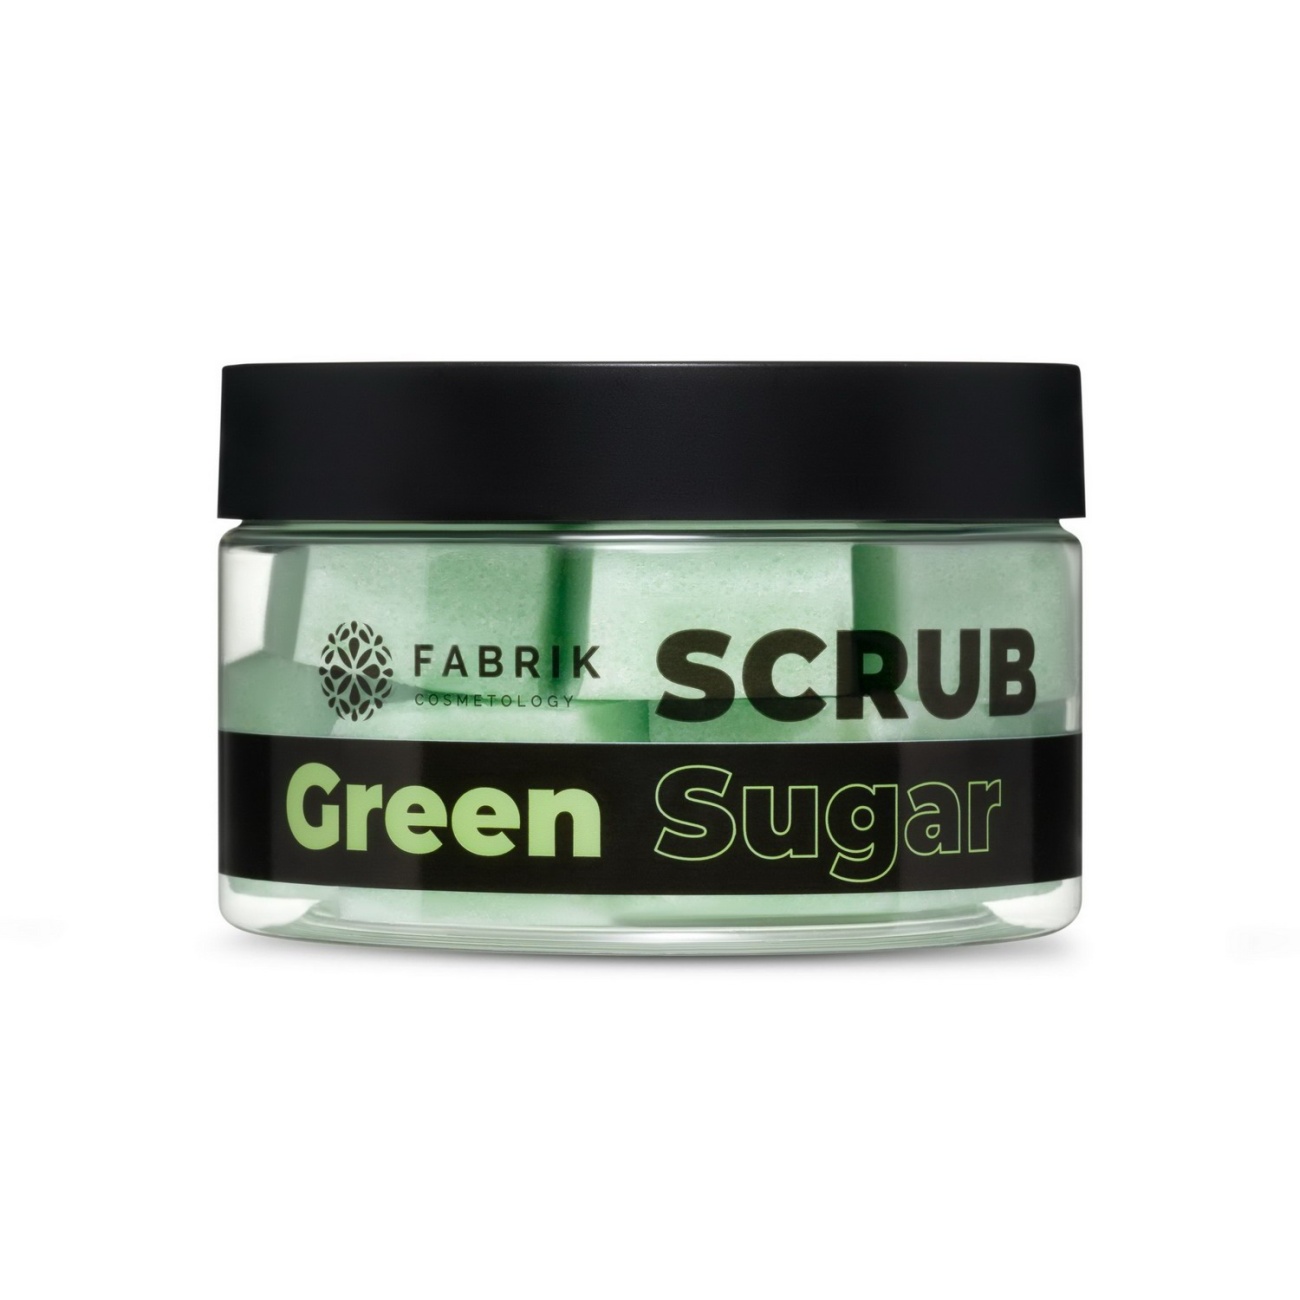 Скраб для тела Fabrik Cosmetology Sugar Green Scrub сахарный 200 г fabrik cosmetology скраб сахарный ледяной кокос 450 гр